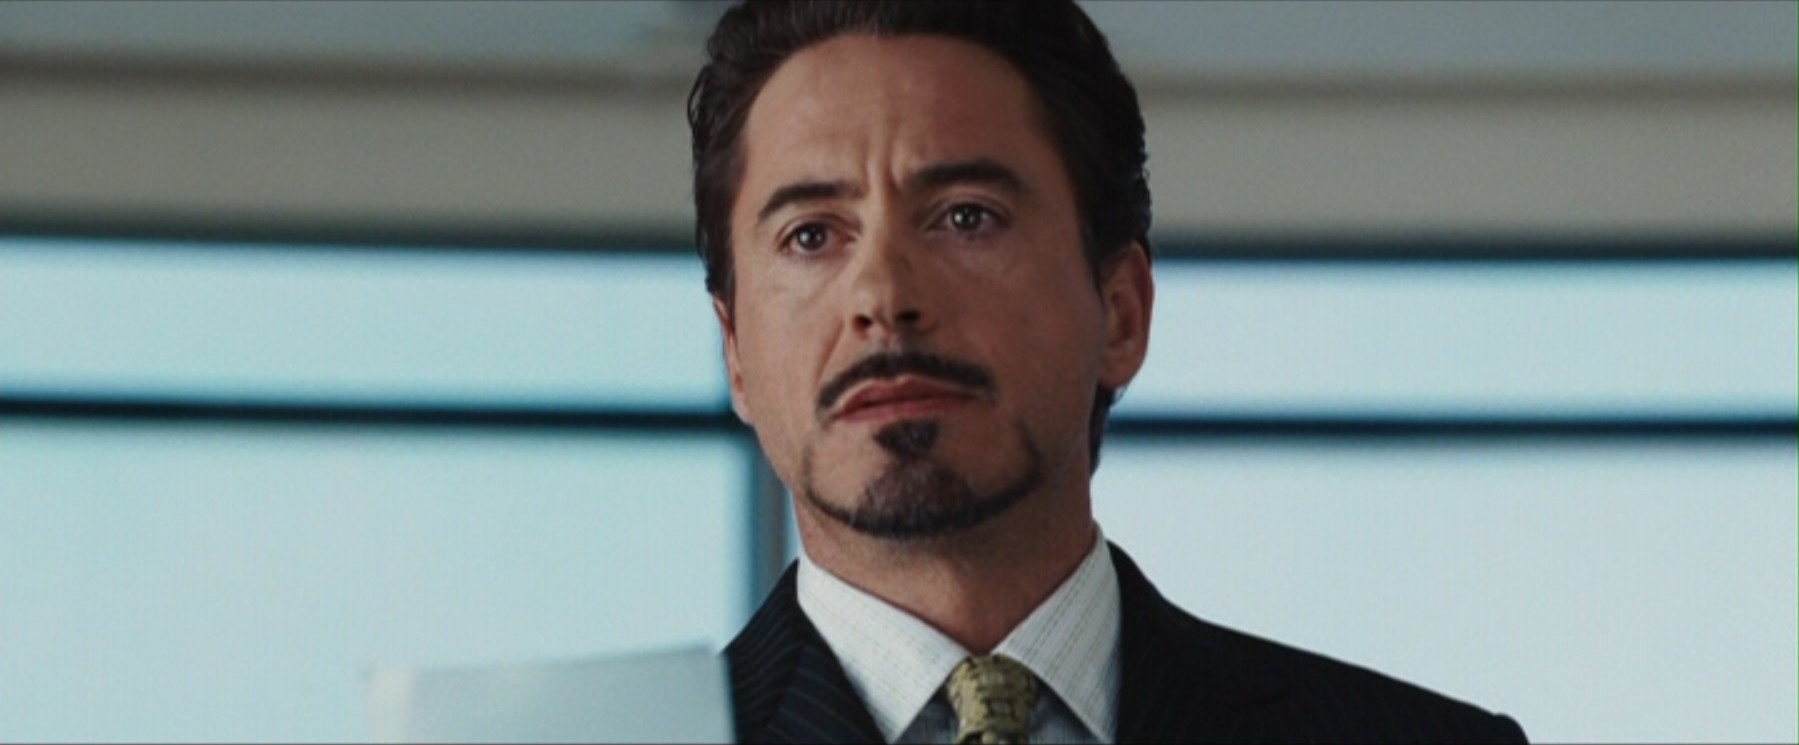 4º Lugar: Tony Stark